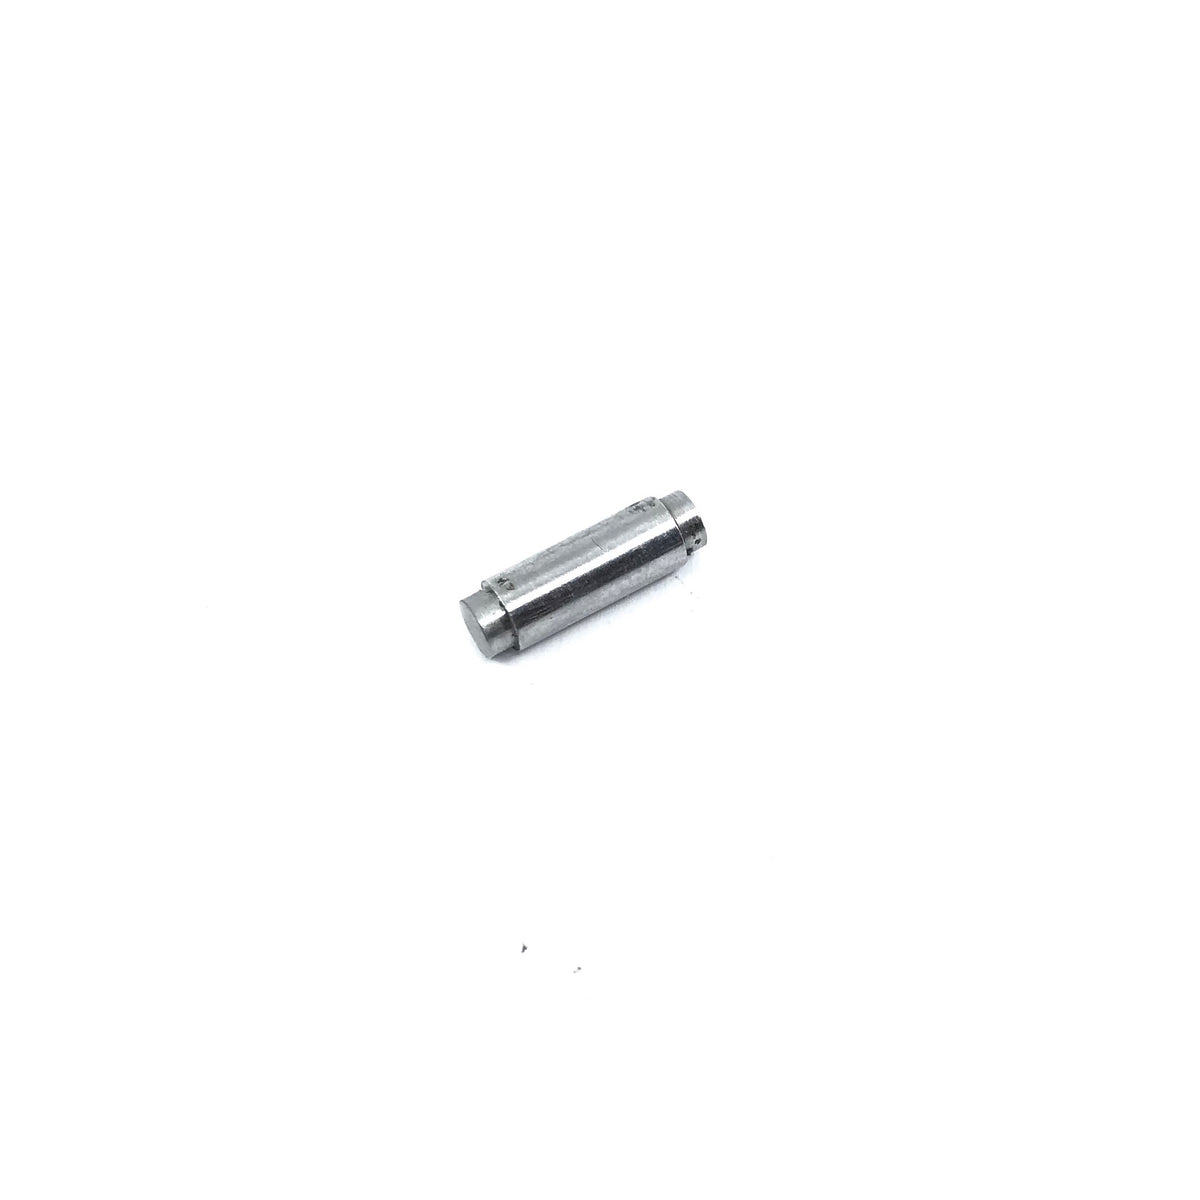 Remington 1187 20GA Lightweight Action Spring Plug Pin